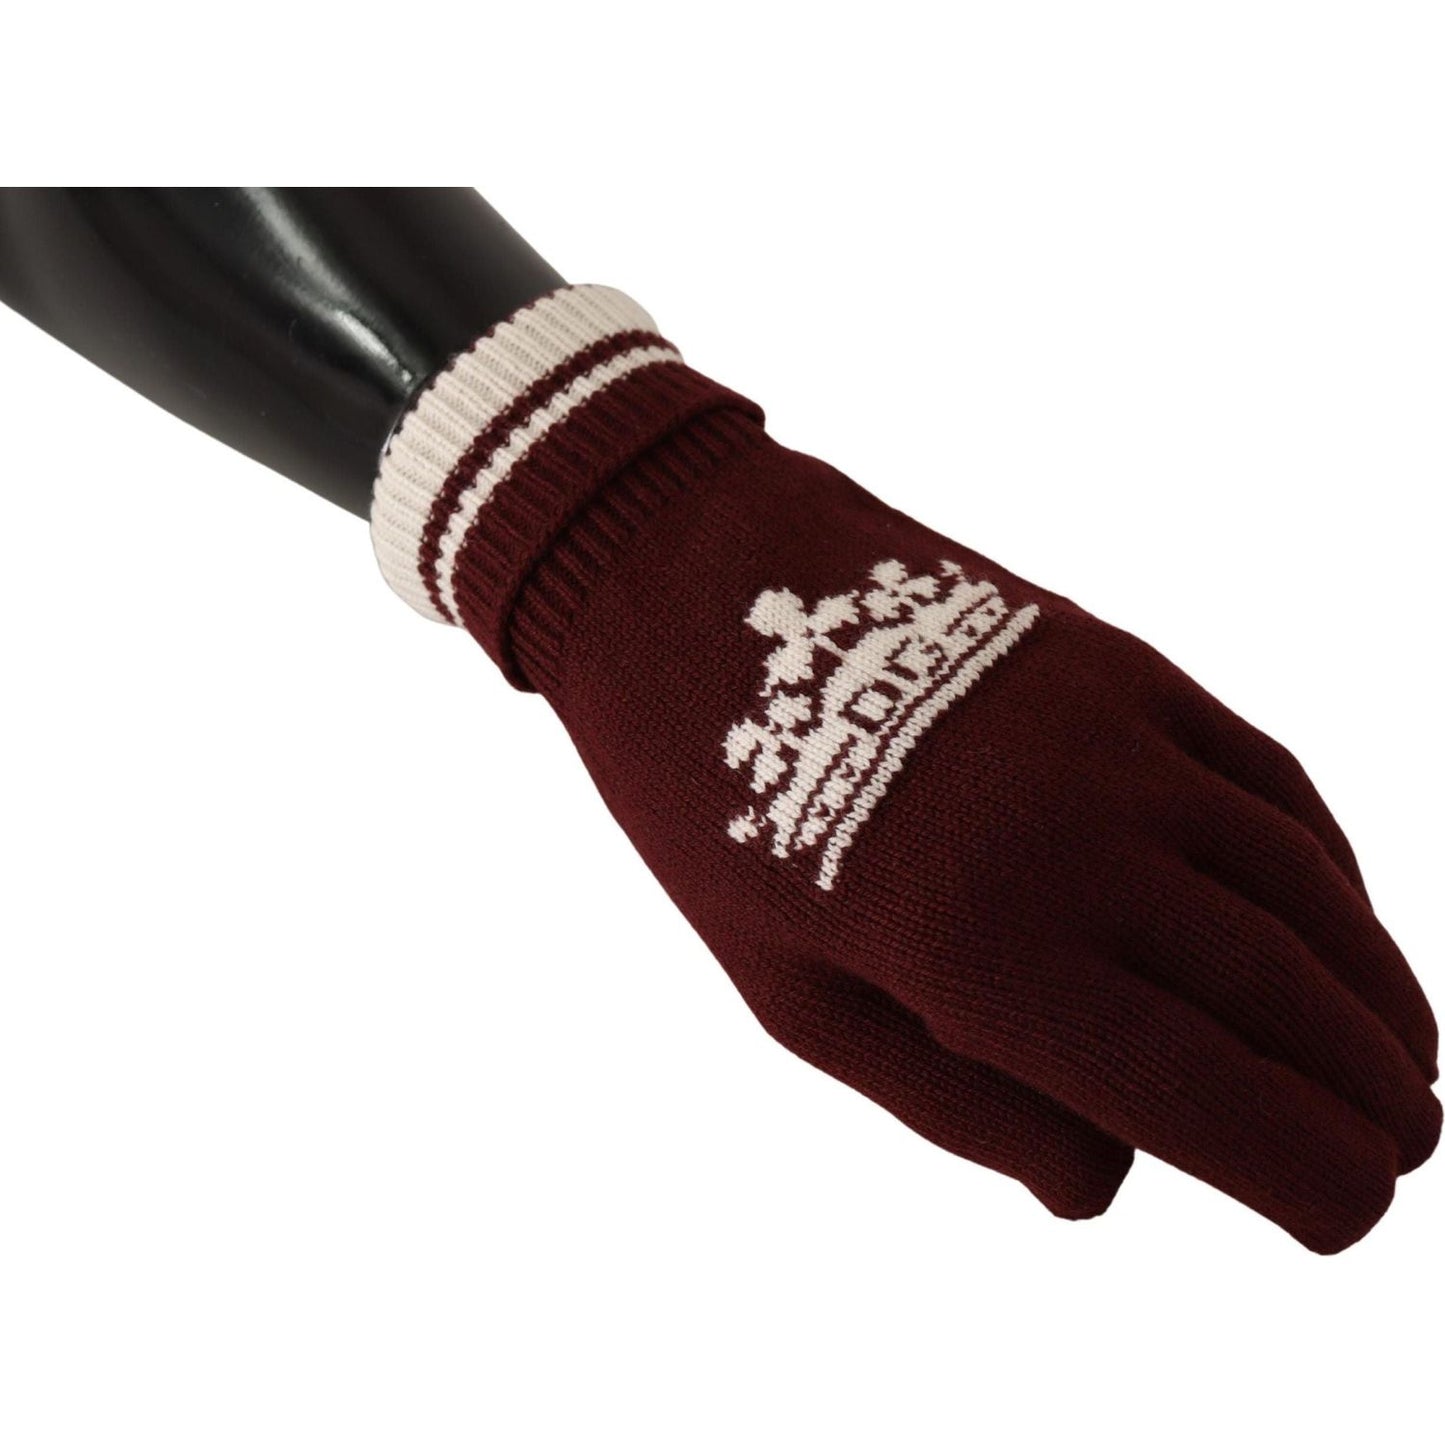 Dolce & Gabbana Elegant Red Cashmere Gloves with Crown Motif red-white-d-g-logo-crown-cashmere-gloves